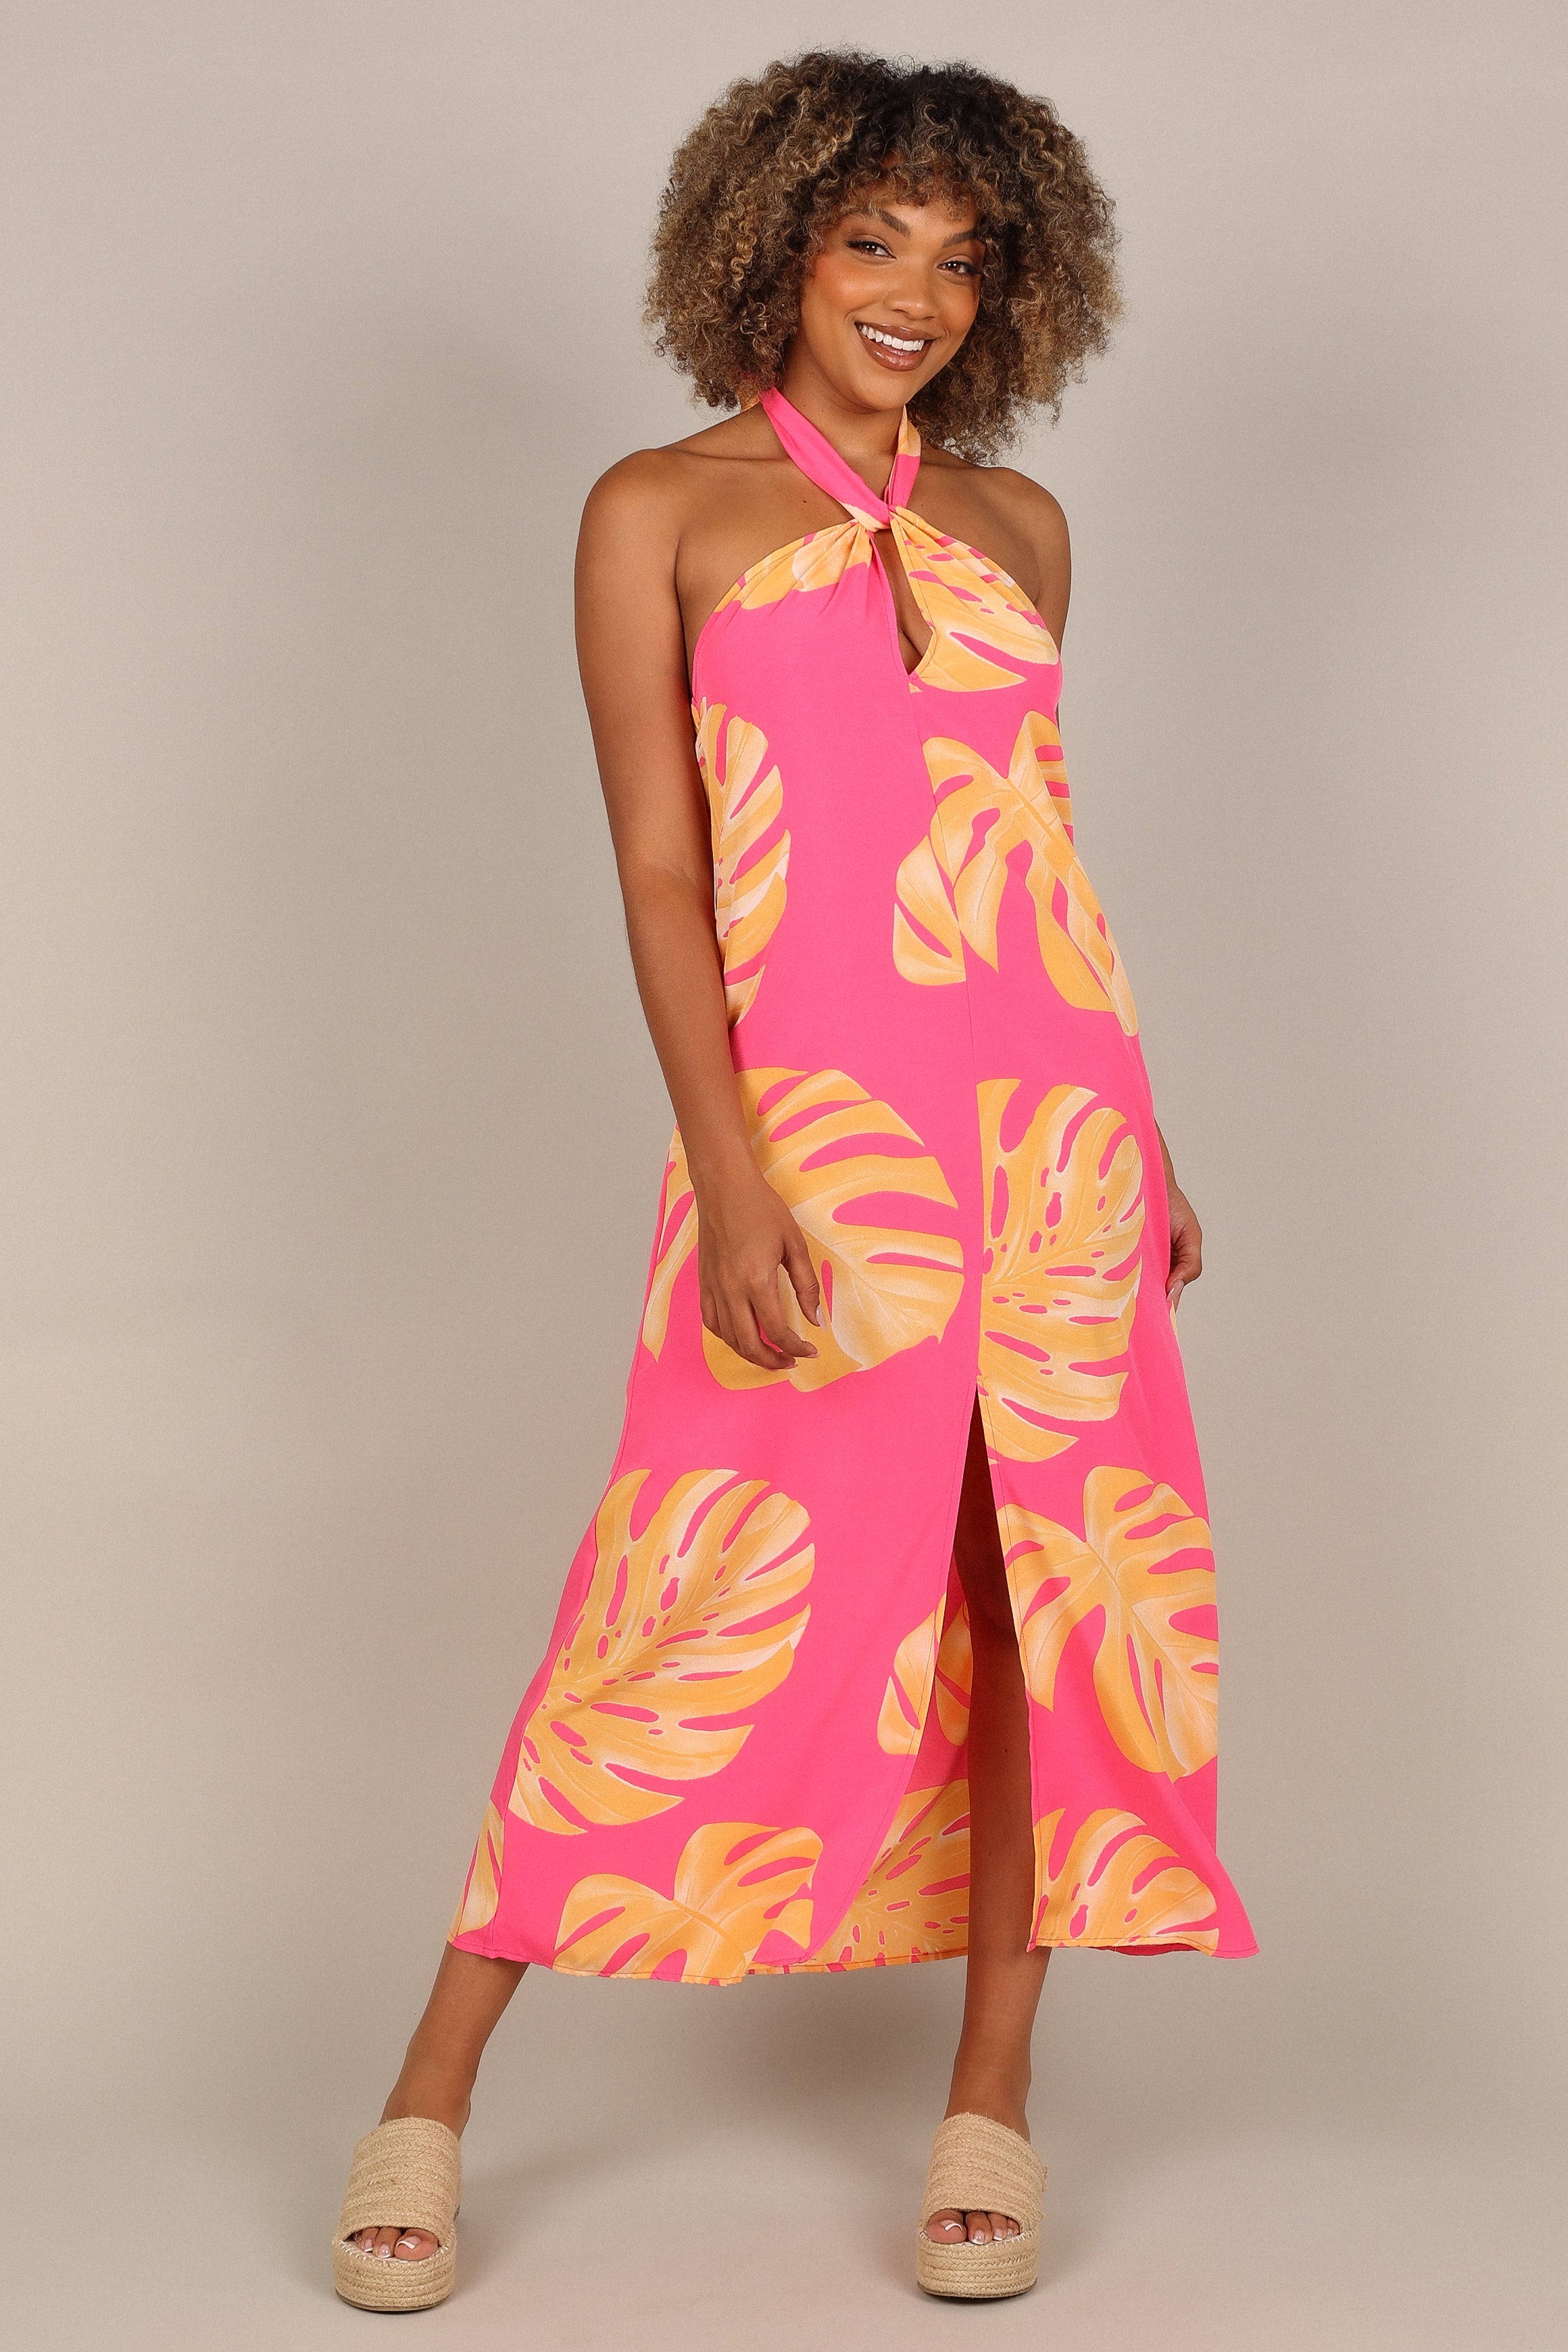 Cute Wrap Dress - Yellow Dress - Floral Dress - Maxi Dress - Lulus